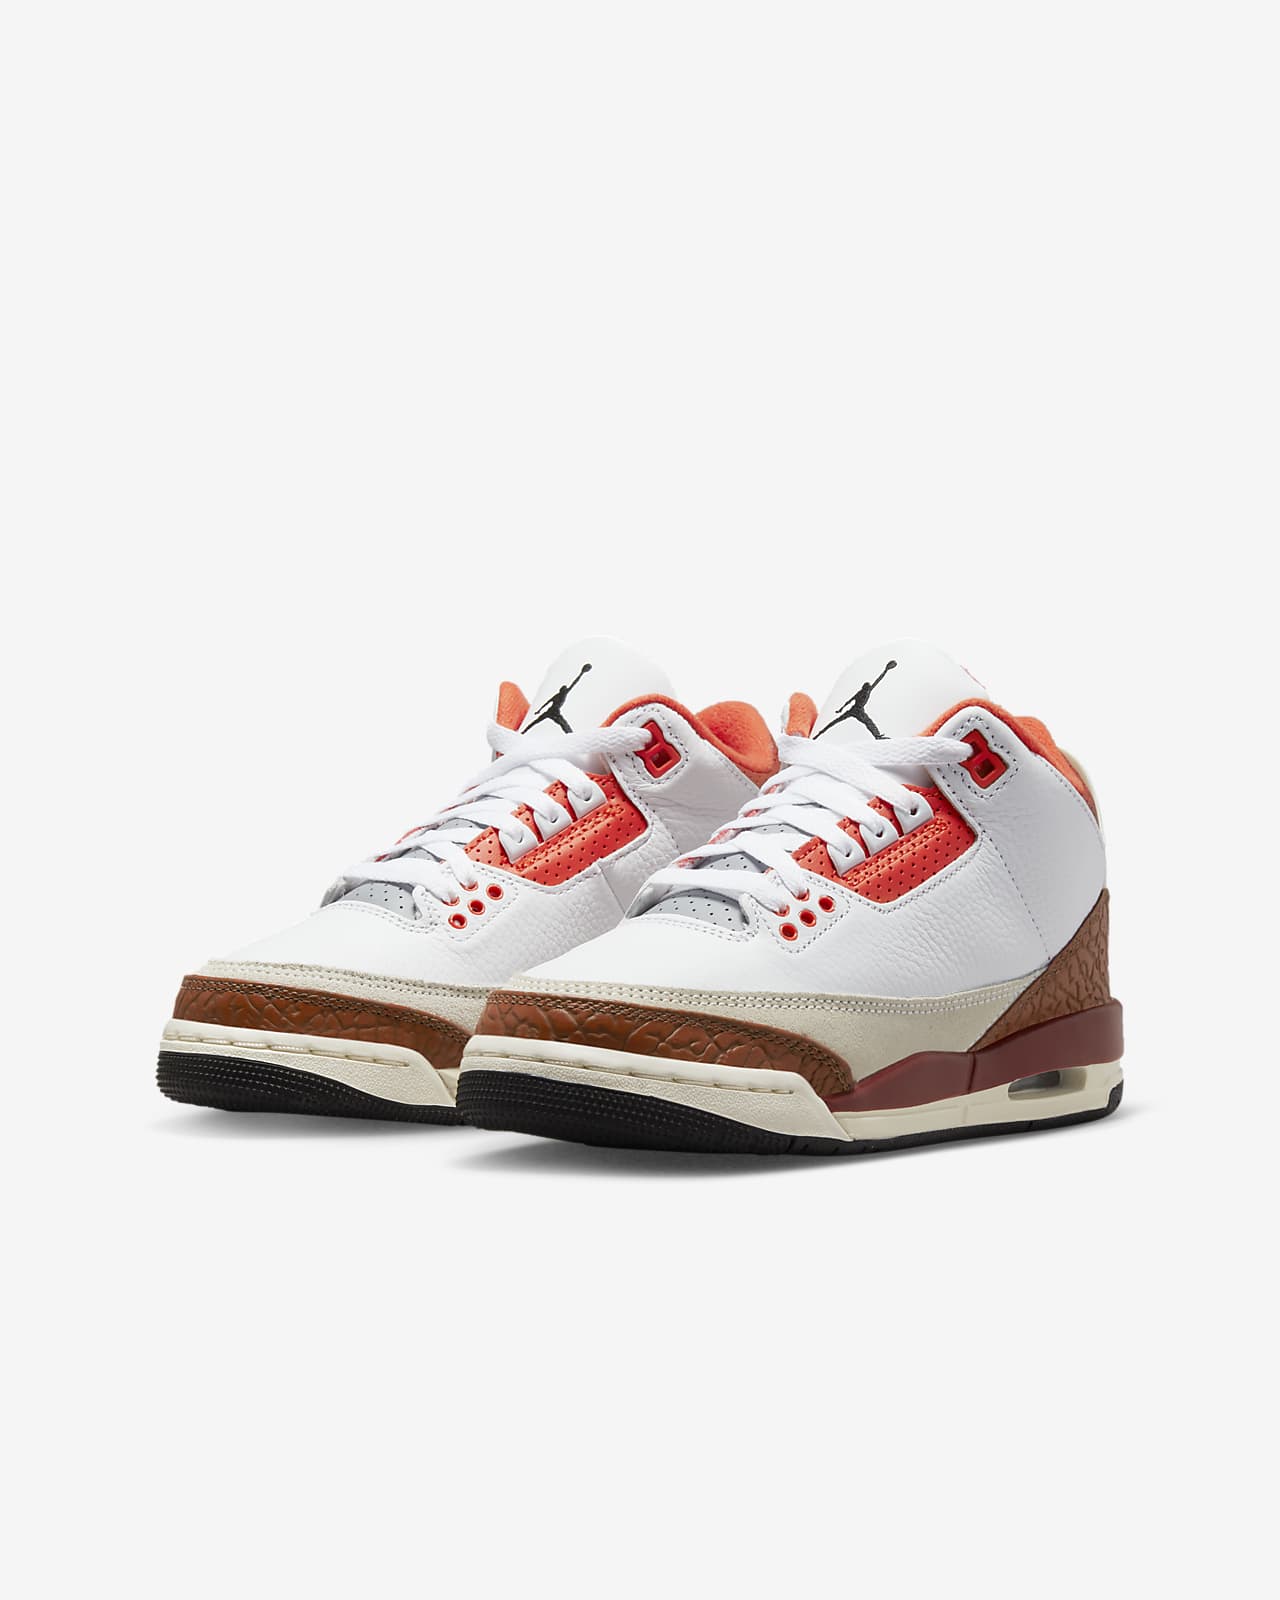 Calzado para niños talla grande Air Jordan 3 SE. Nike.com